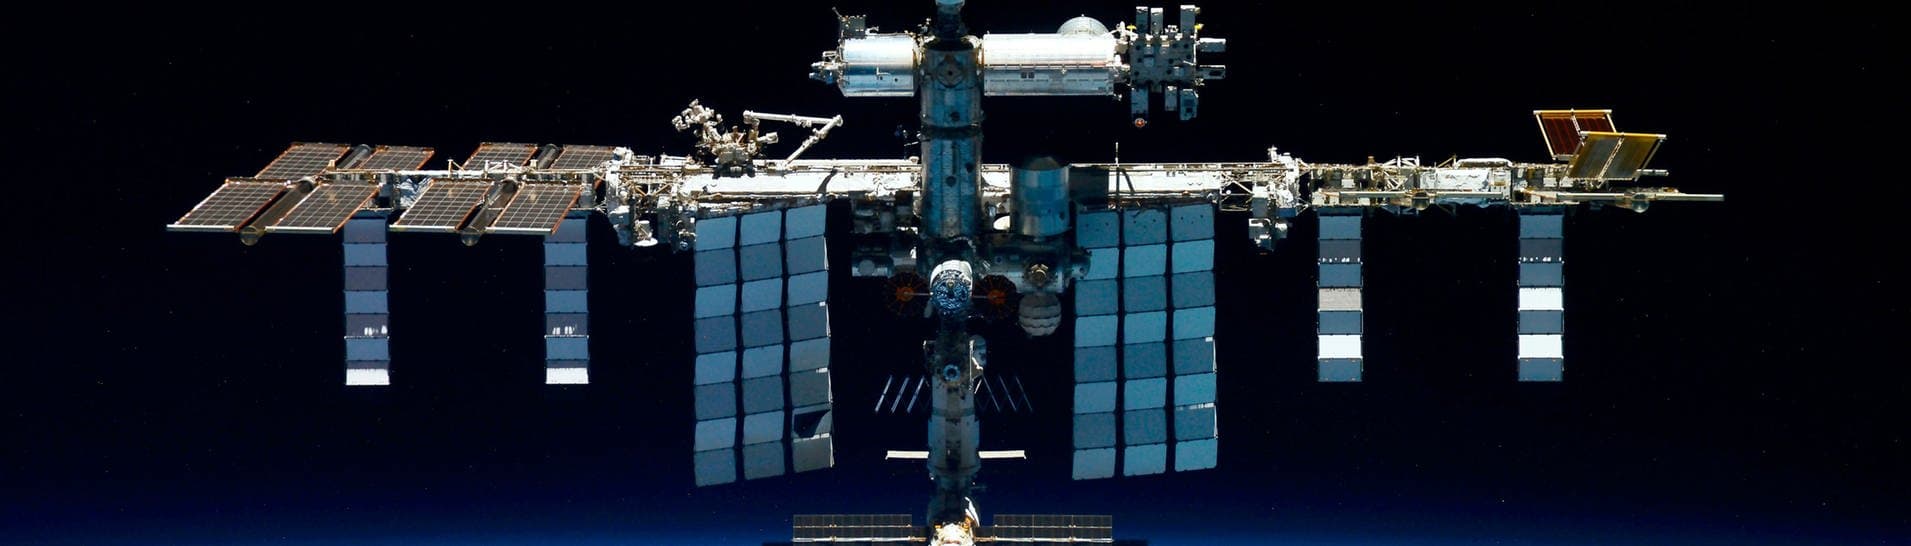 International Space Station ISS (Foto: dpa Bildfunk, picture alliance/dpa/AP | -)